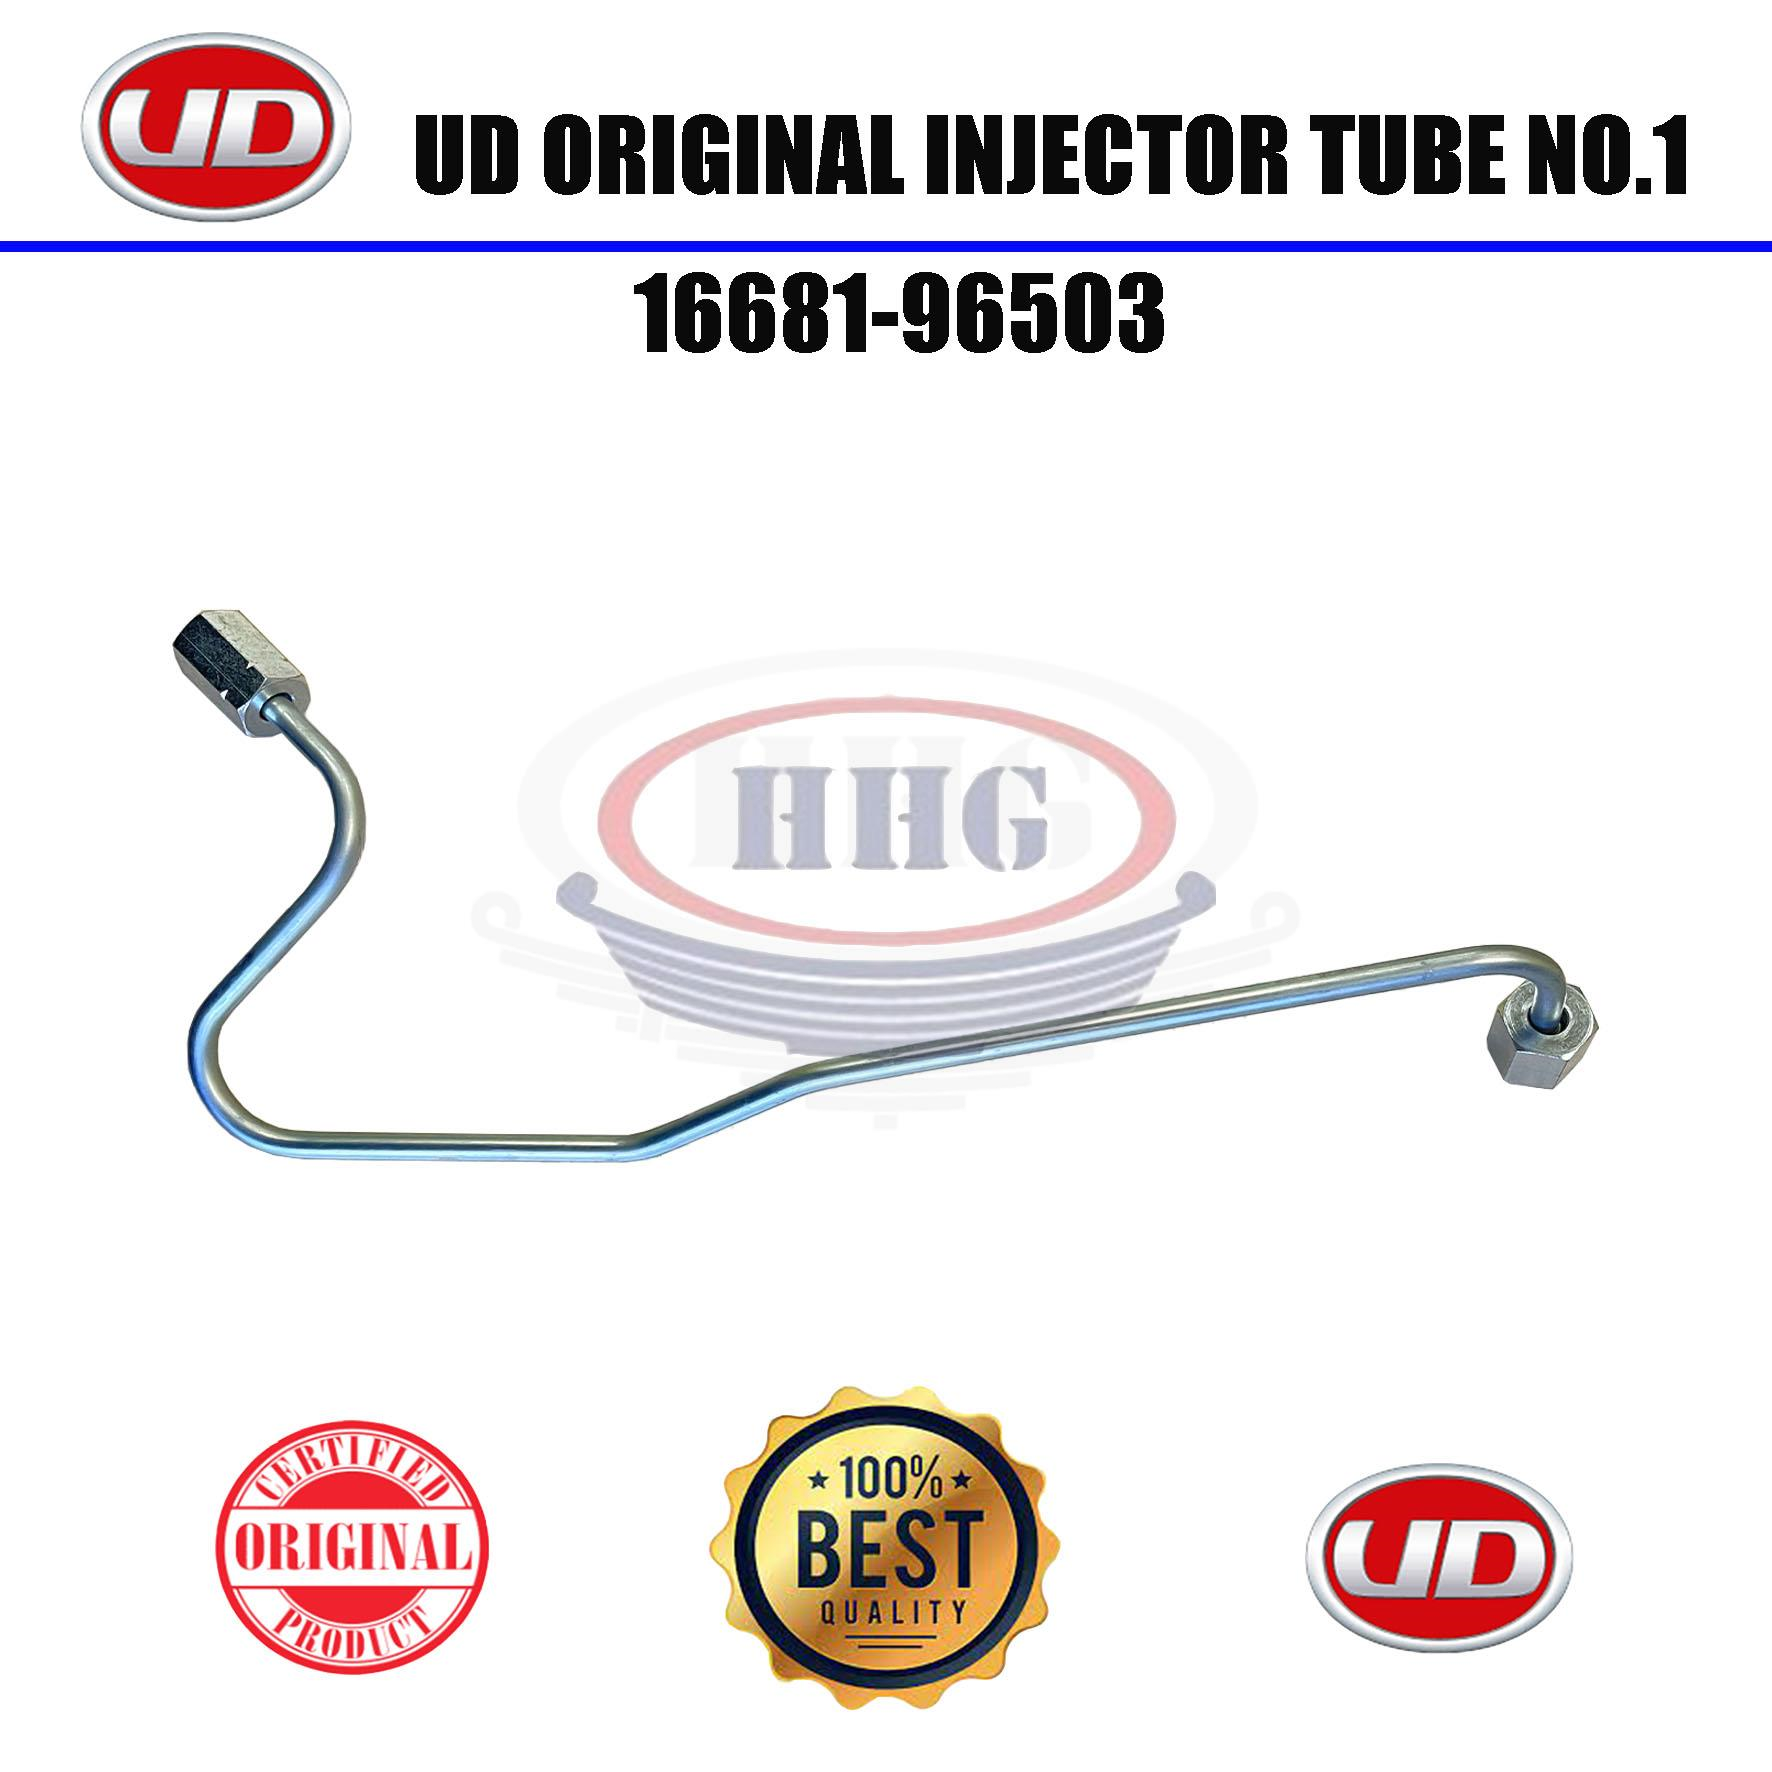 UD Original JA452 PF6T Injector Tube No.1 (16681-96503)